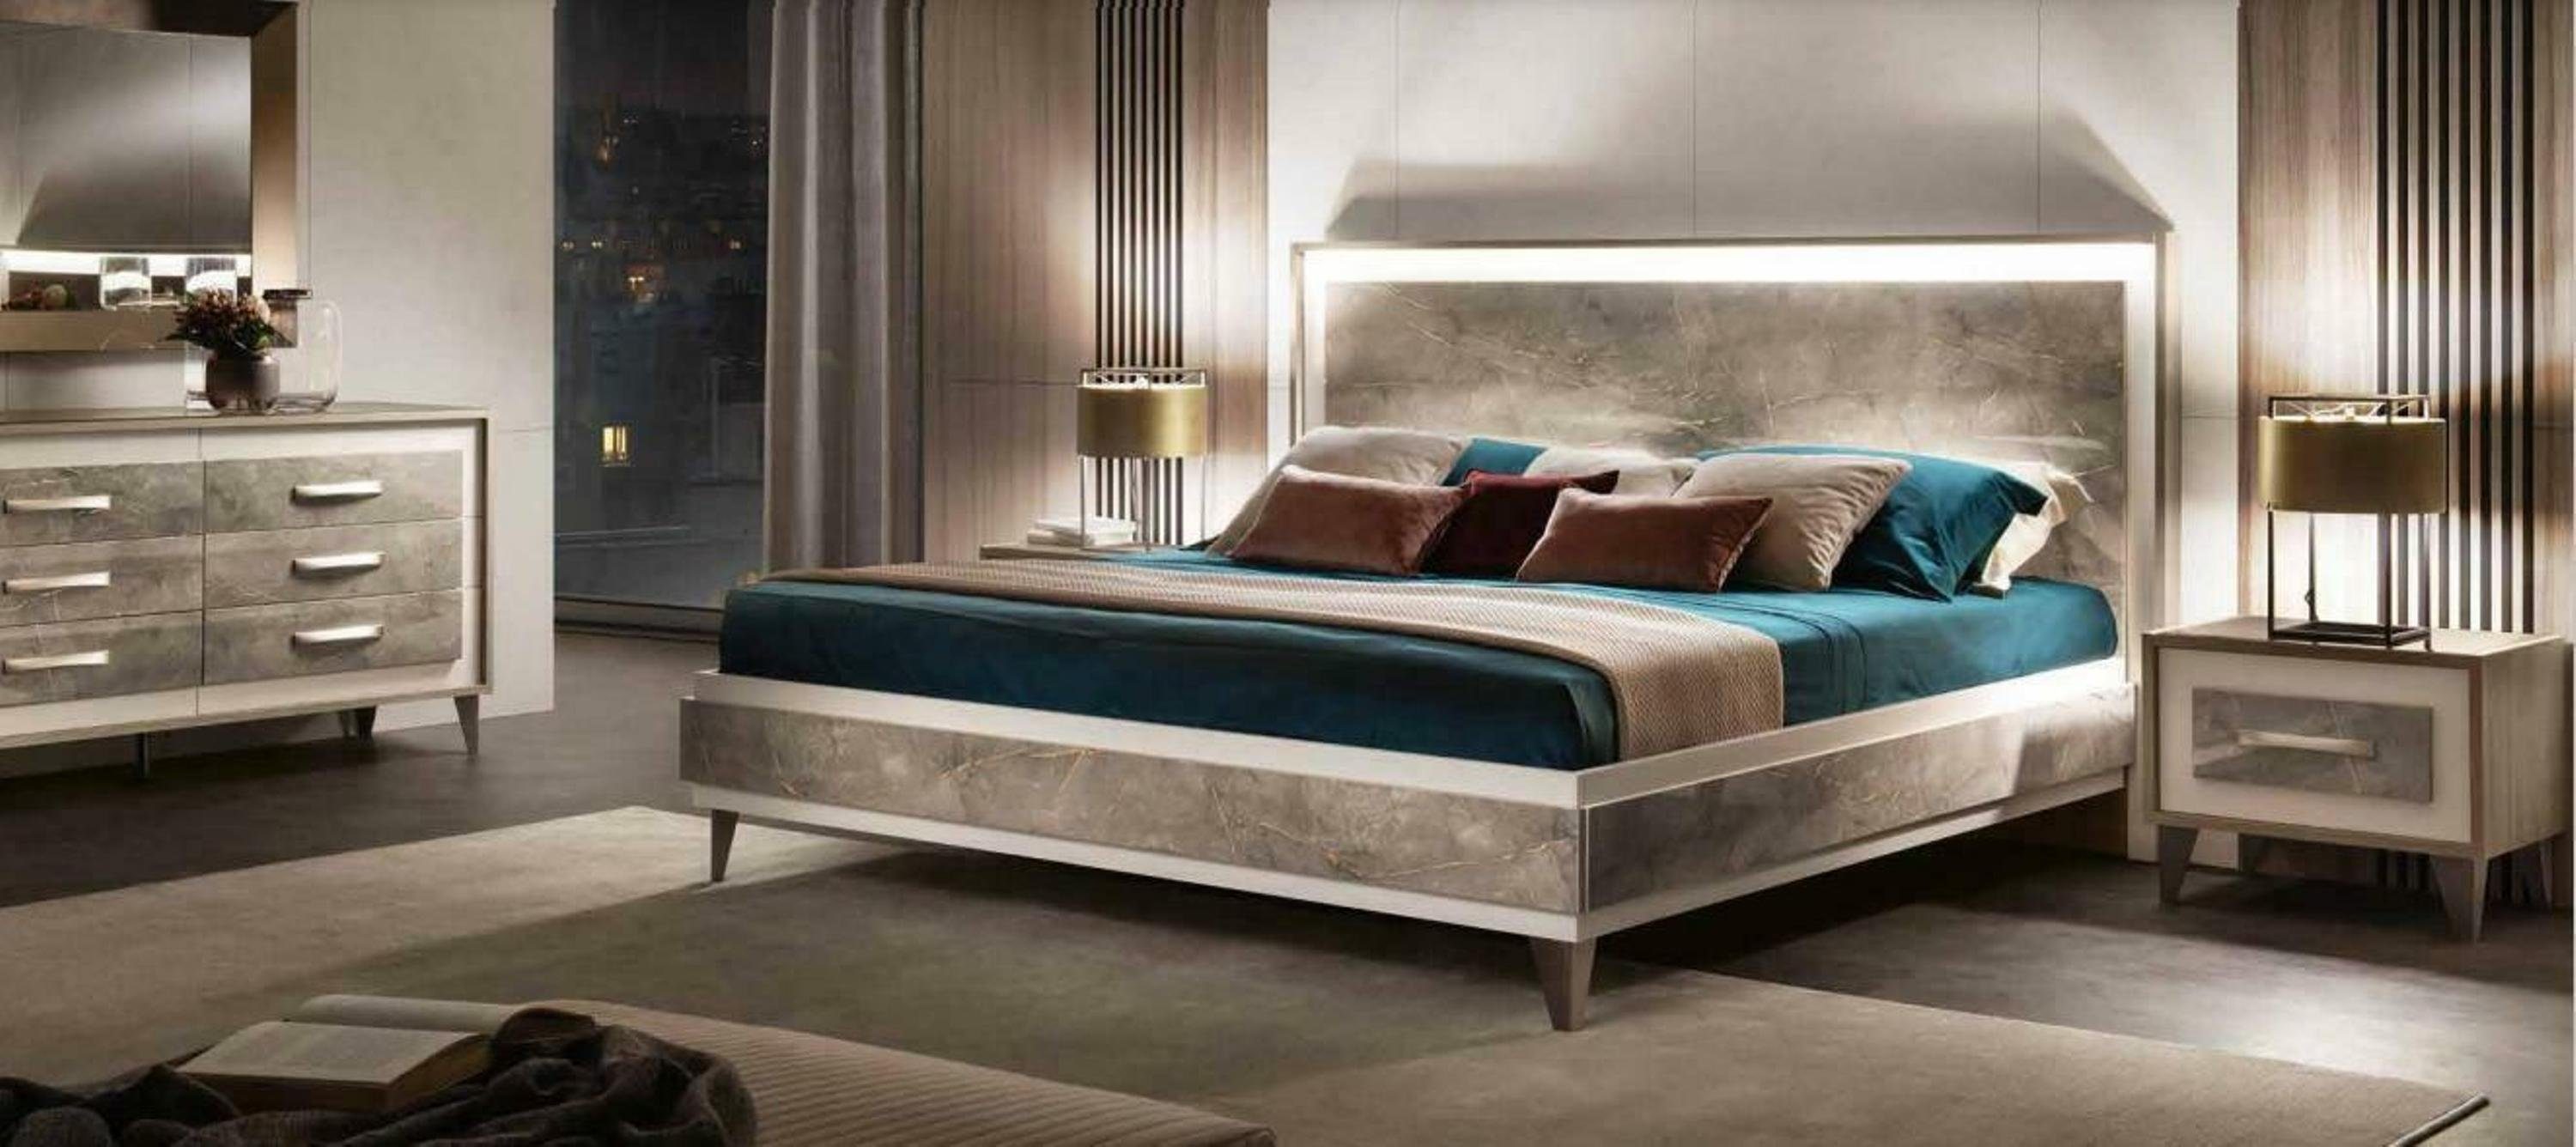 JVmoebel Bett Bett Polster Design Luxus Doppel Hotel Betten Ehe Schlaf Zimmer (Bett)